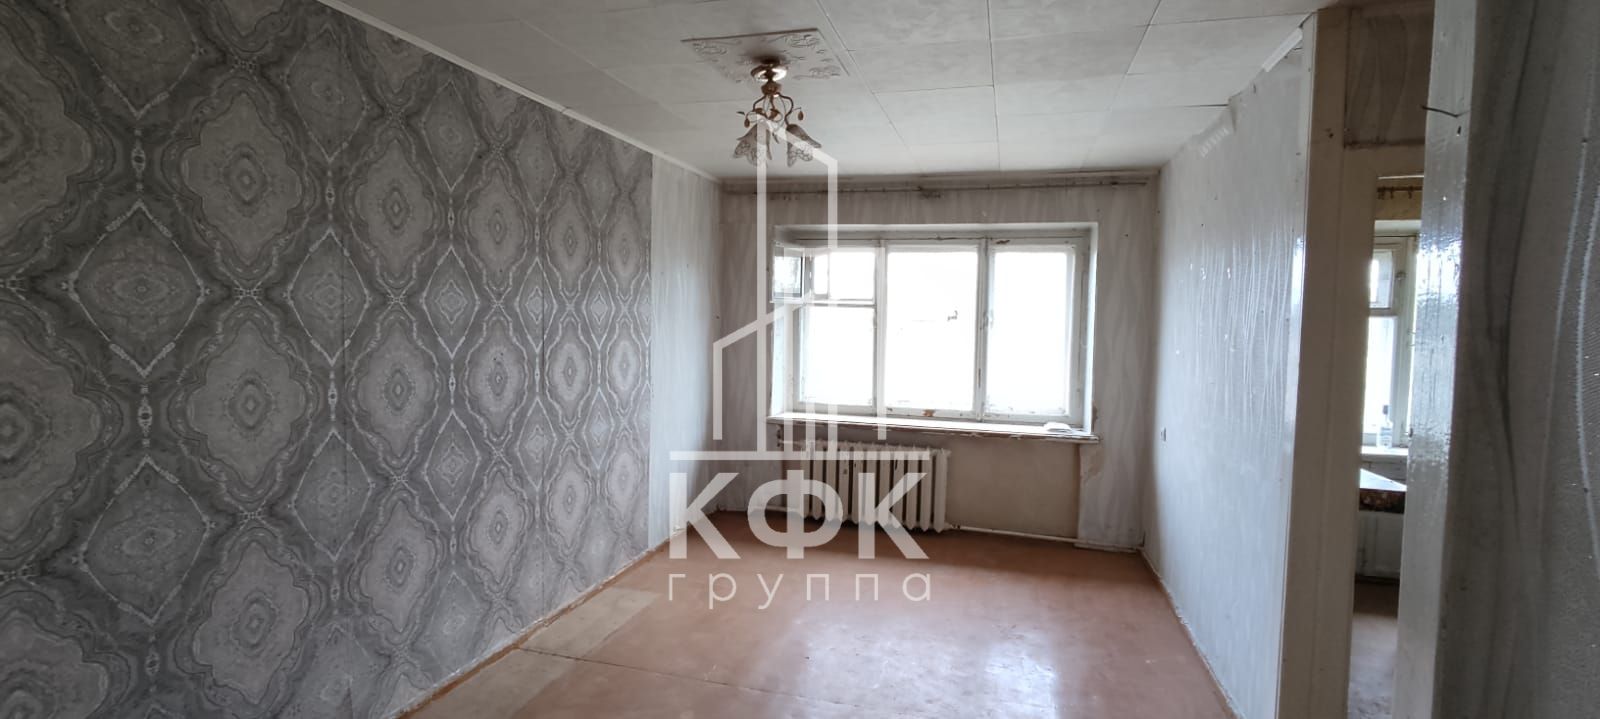 Продажа 1-комнатной квартиры, Кострома, Черноречье микрорайон,  д.21